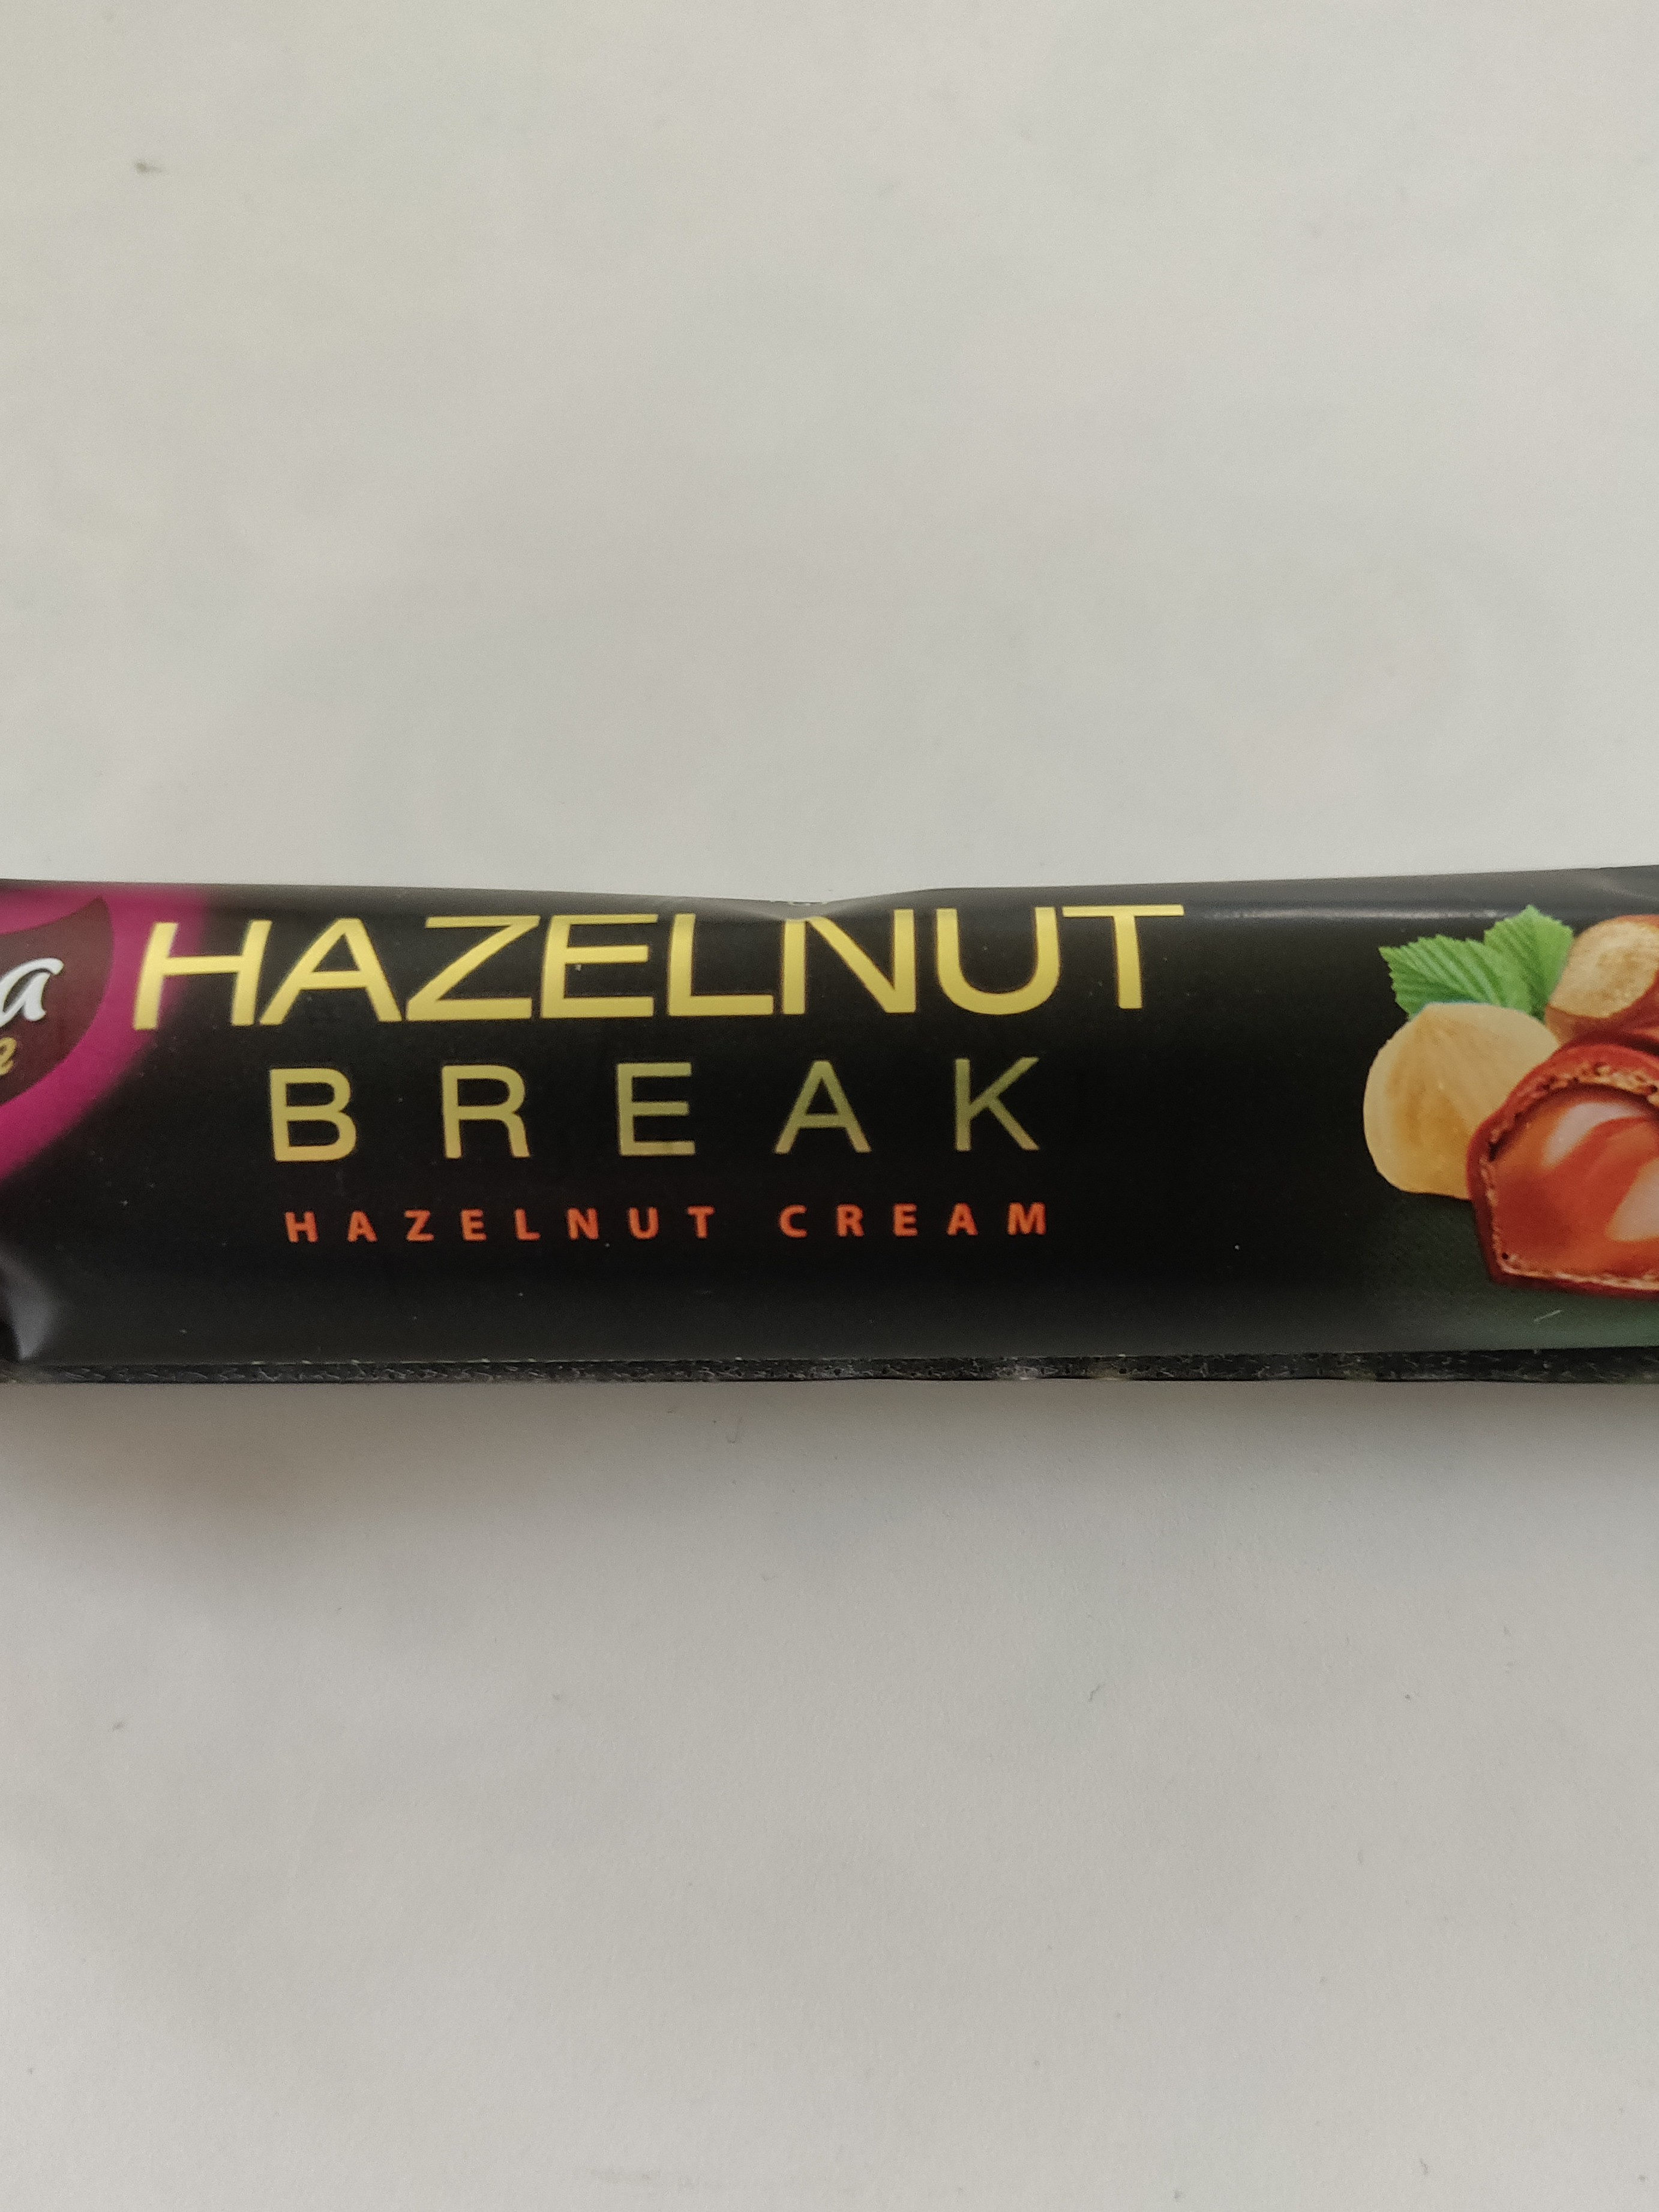 Hazelnut break - Product - pl